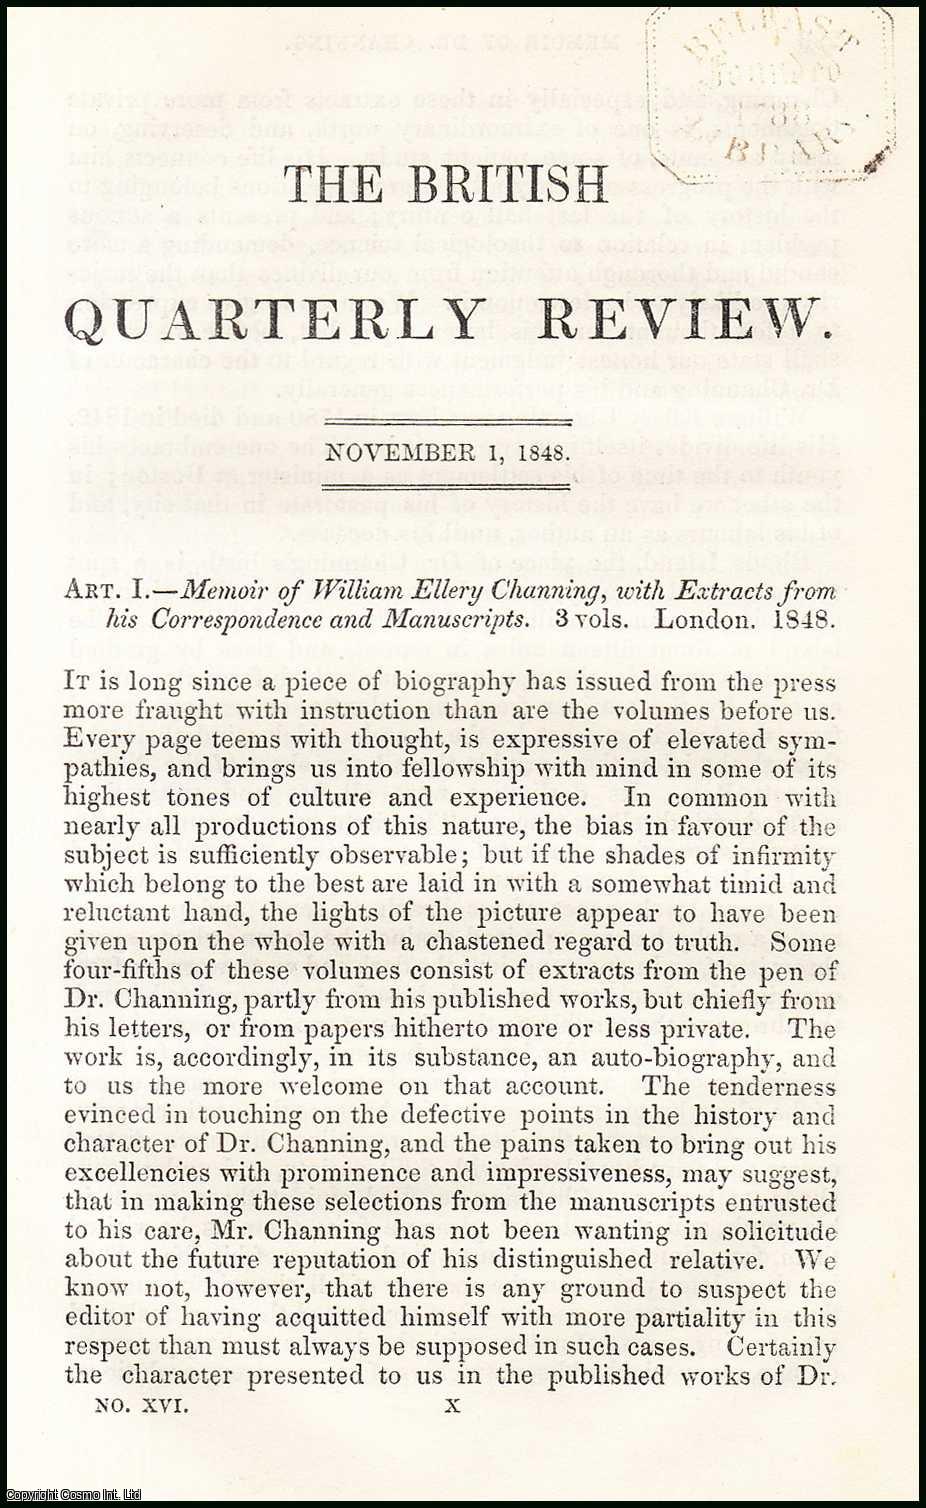 Robert Vaughan - Memoir of William Ellery Channing. An original article from the British Quarterly Review 1848.